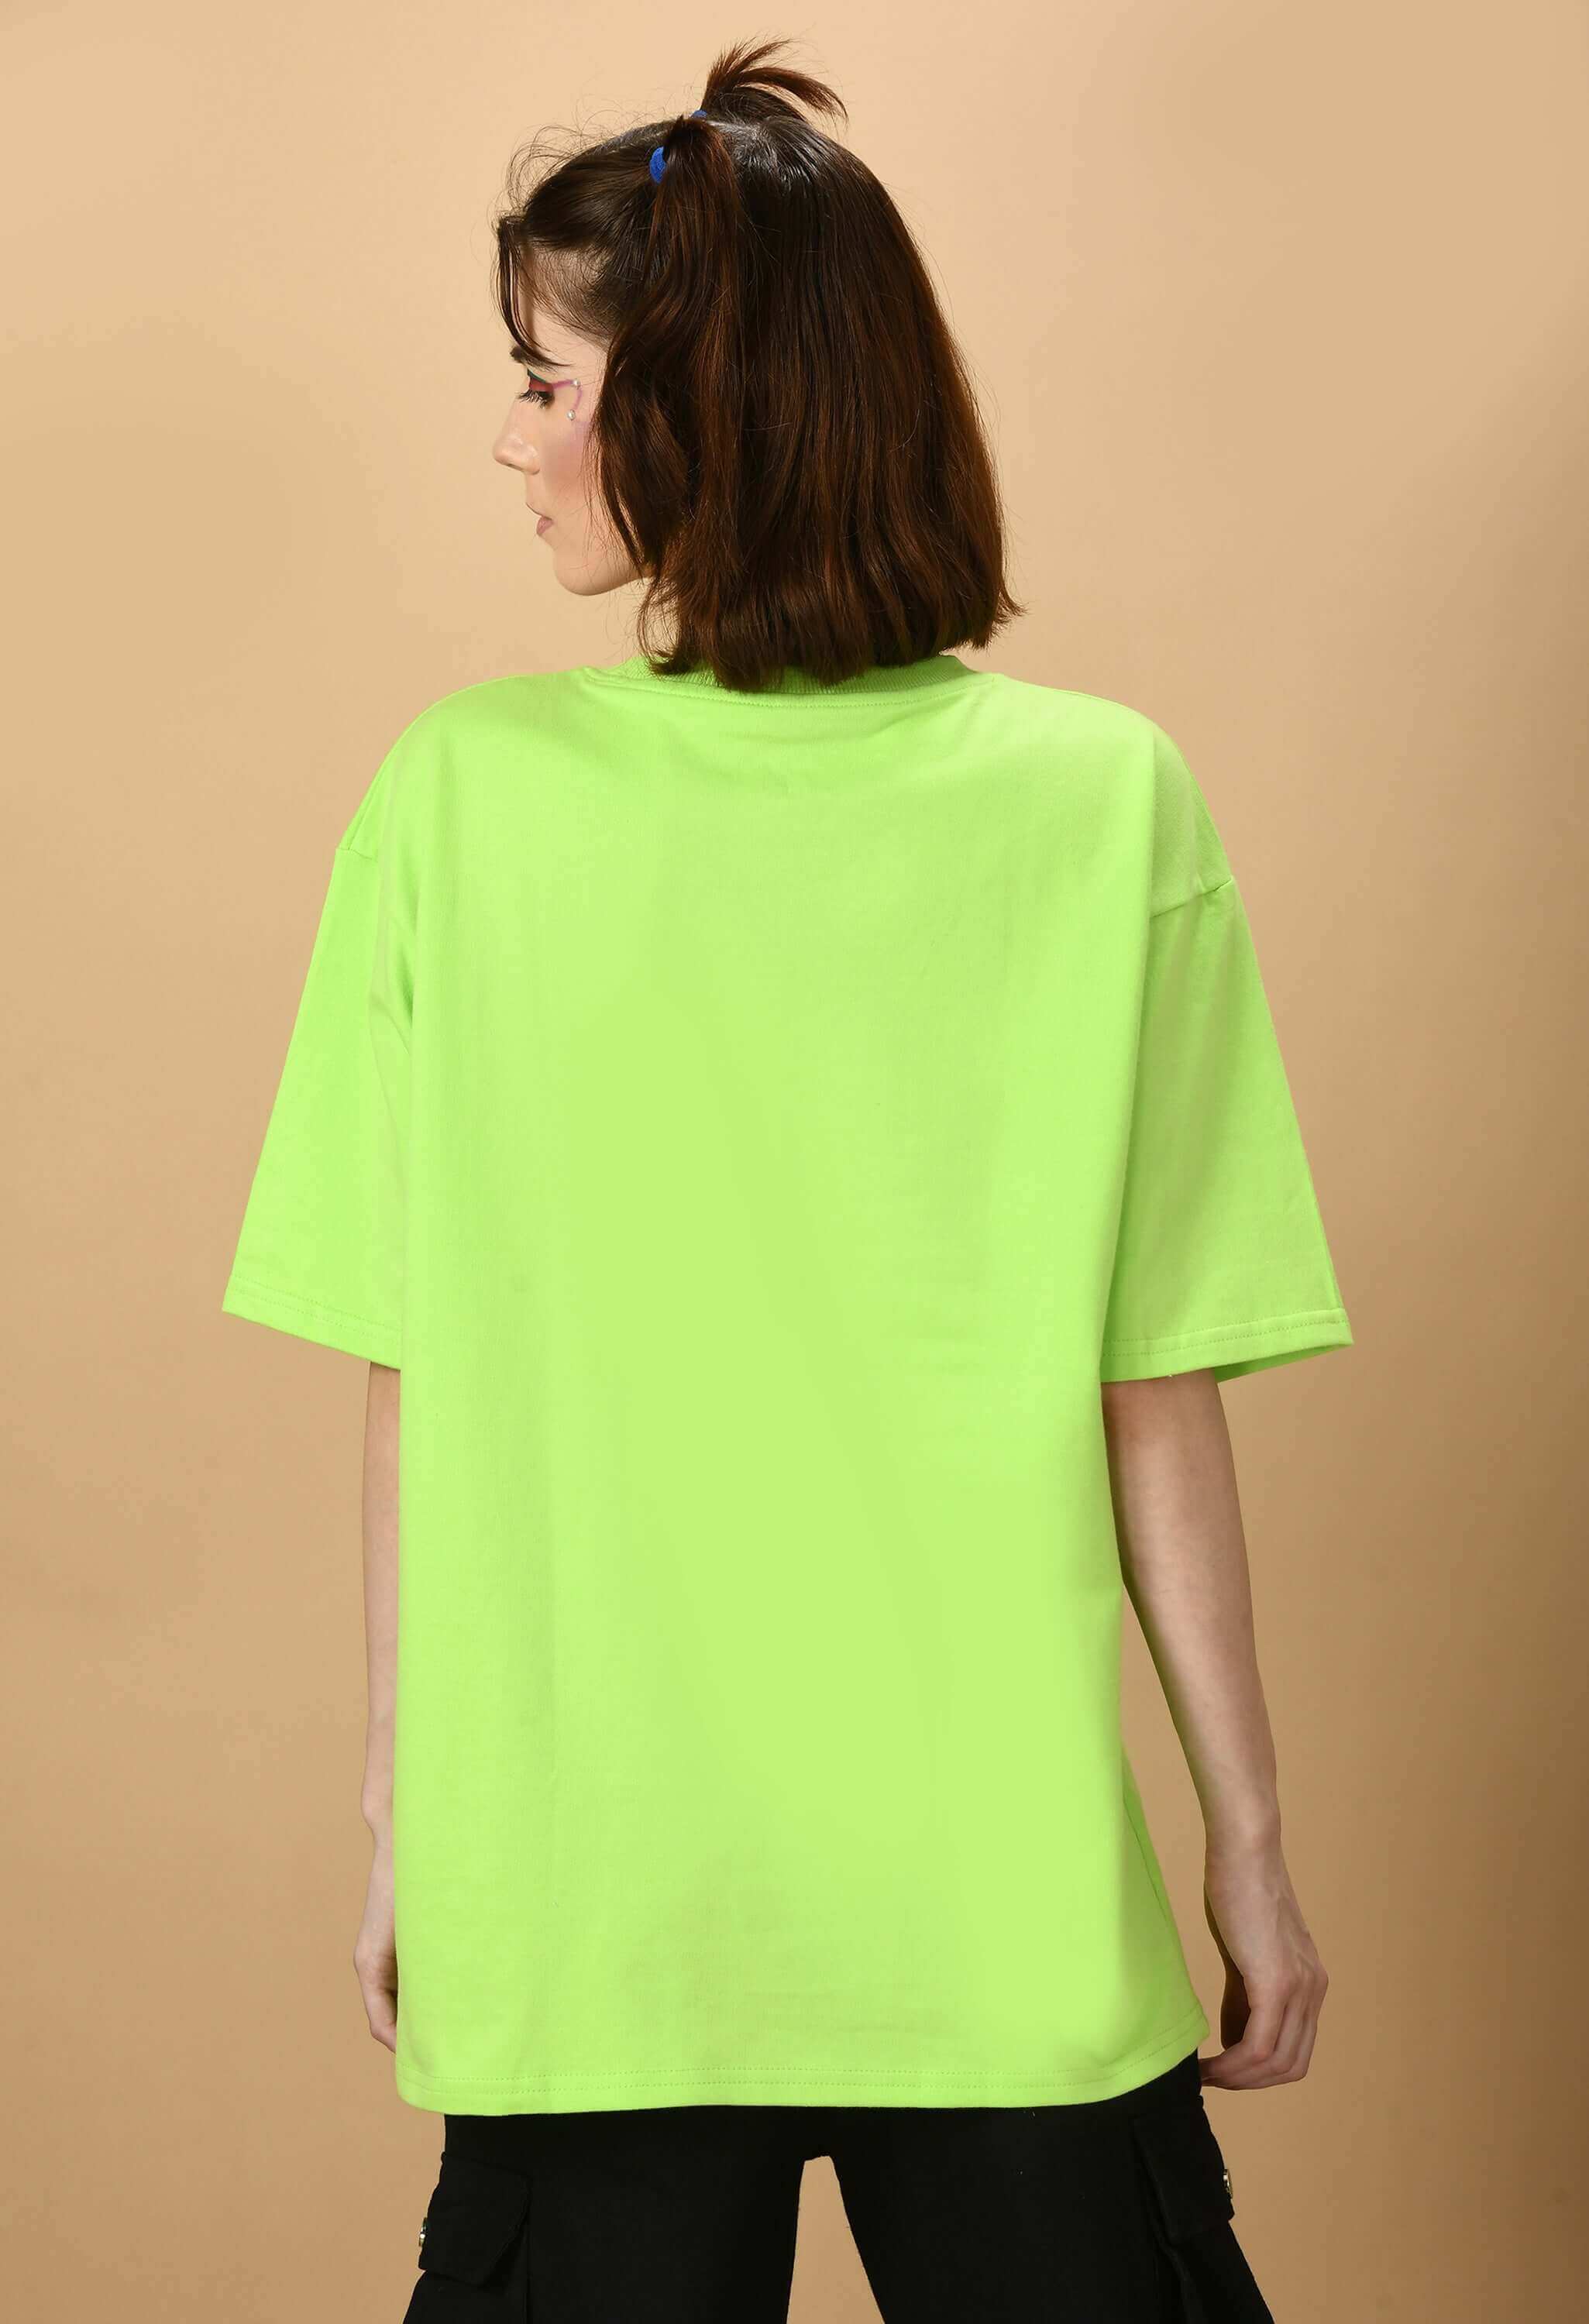 Neon green color plain women's oversized t-shirt 